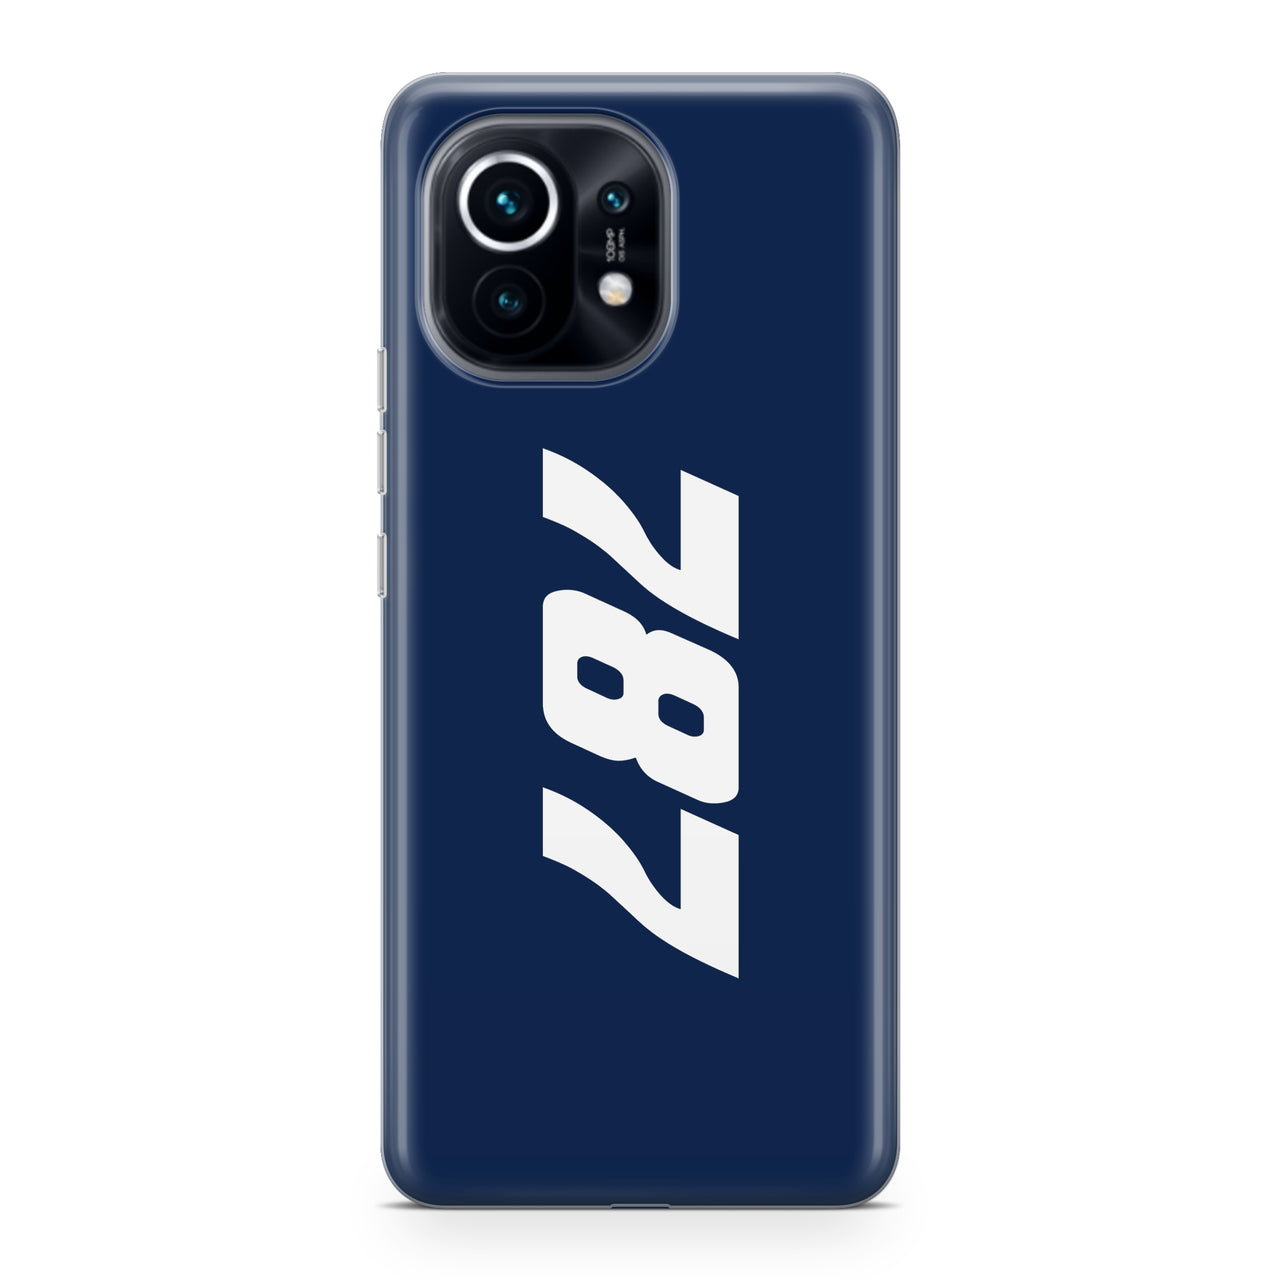 Boeing 787 Text Designed Xiaomi Cases